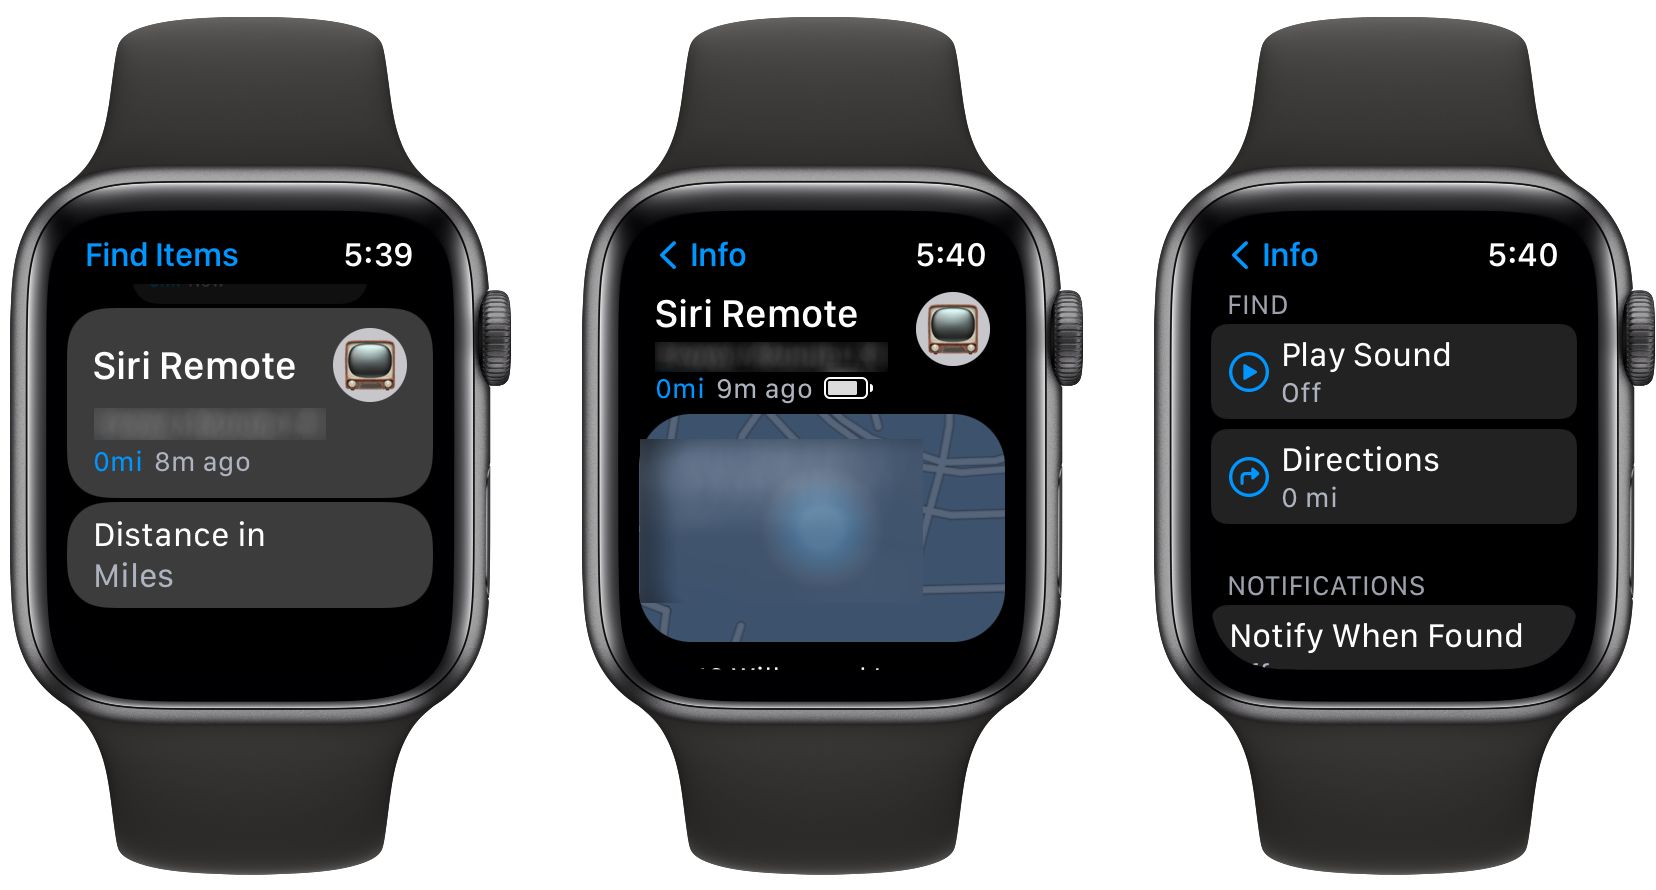 New find my iphone update on apple watch #howtotiktok #tutorial #apple... |  Apple Watch | TikTok